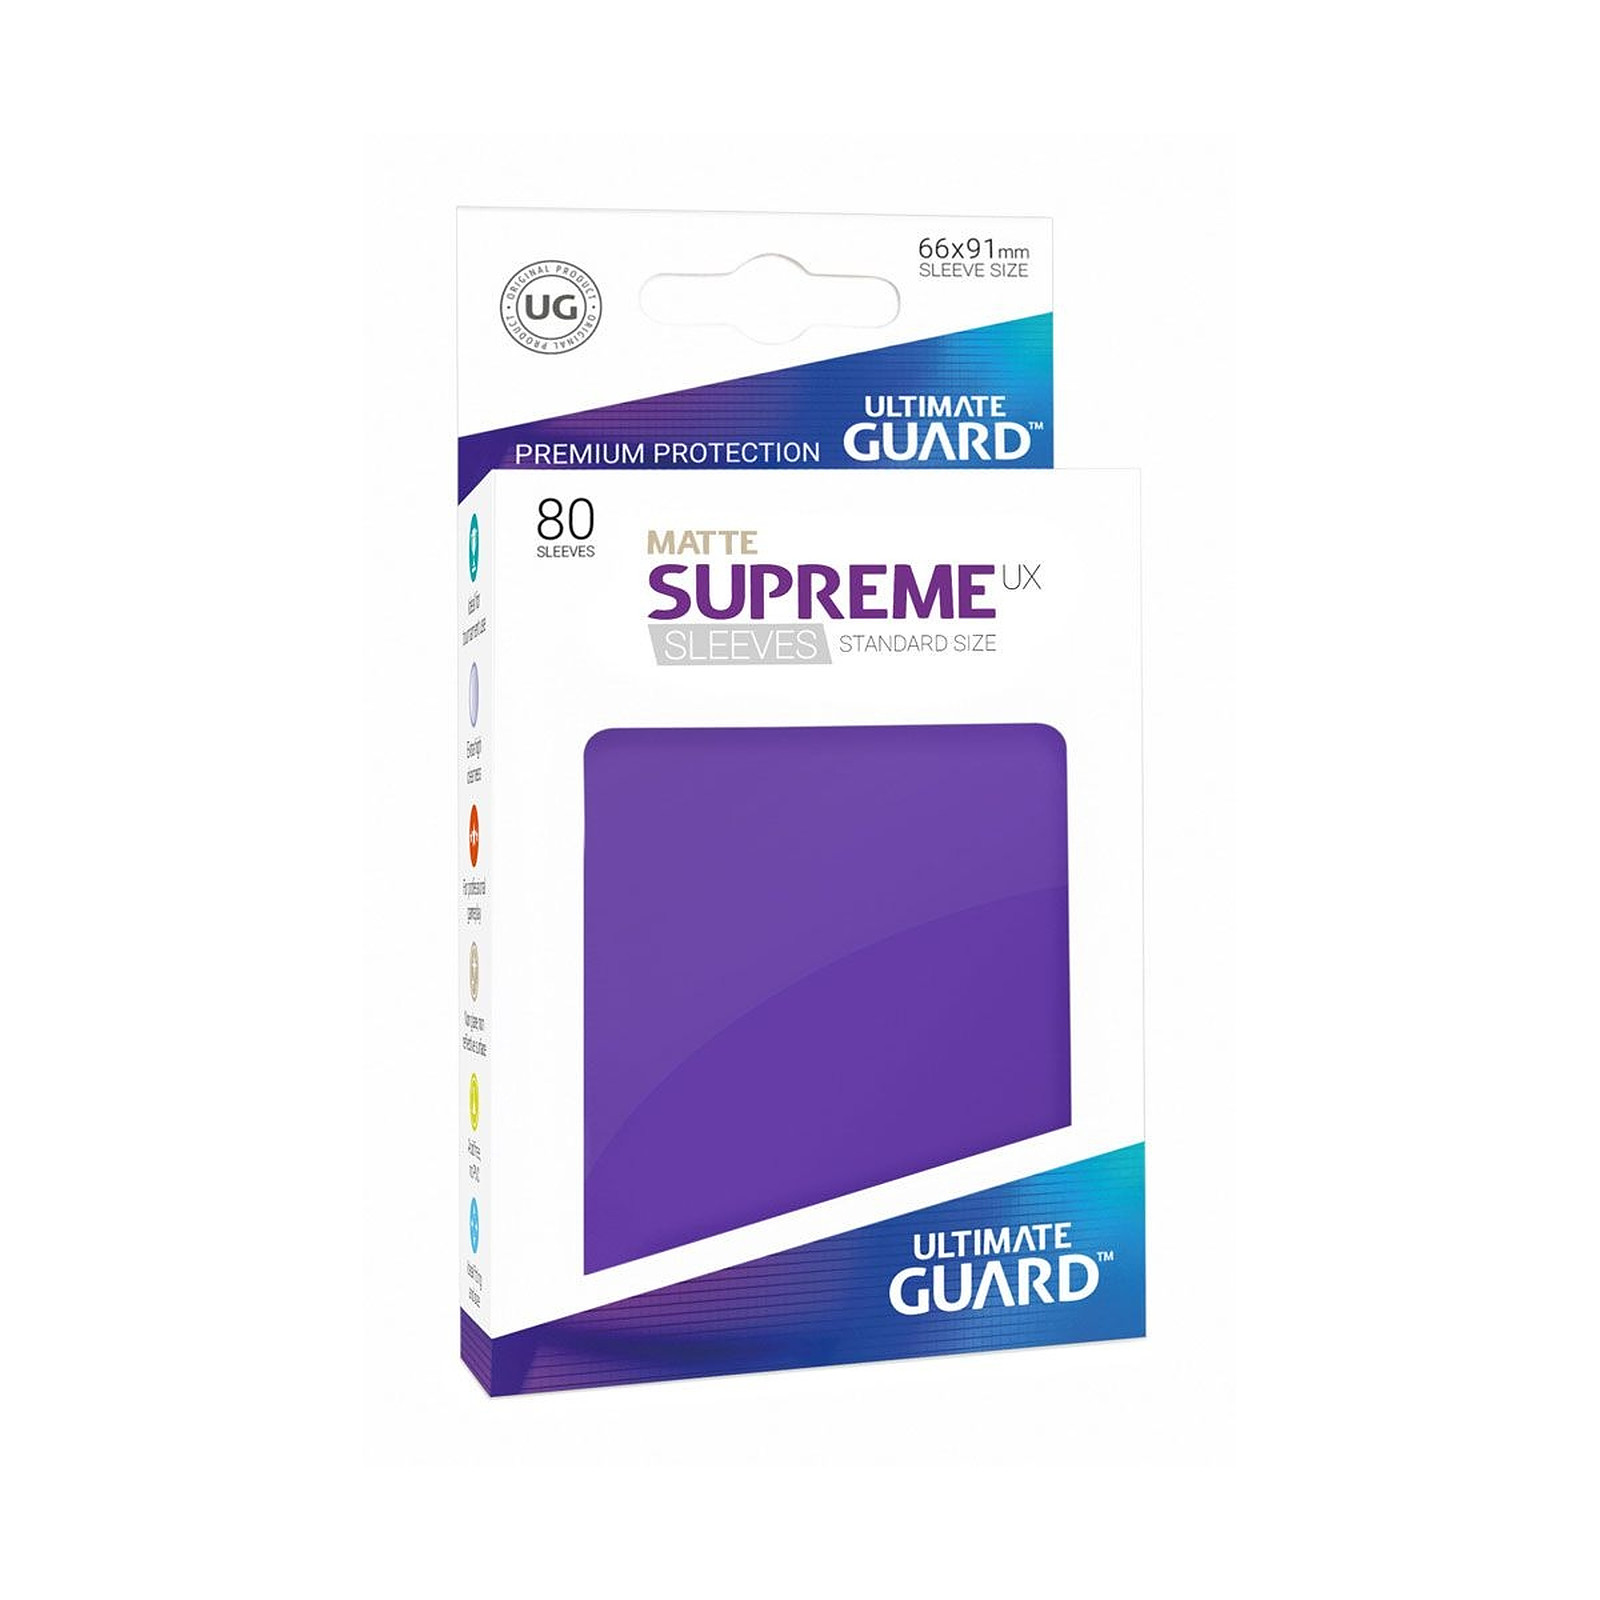 Ultimate Guard - 80 pochettes Supreme UX Sleeves taille standard Violet Mat - Accessoire jeux Ultimate Guard